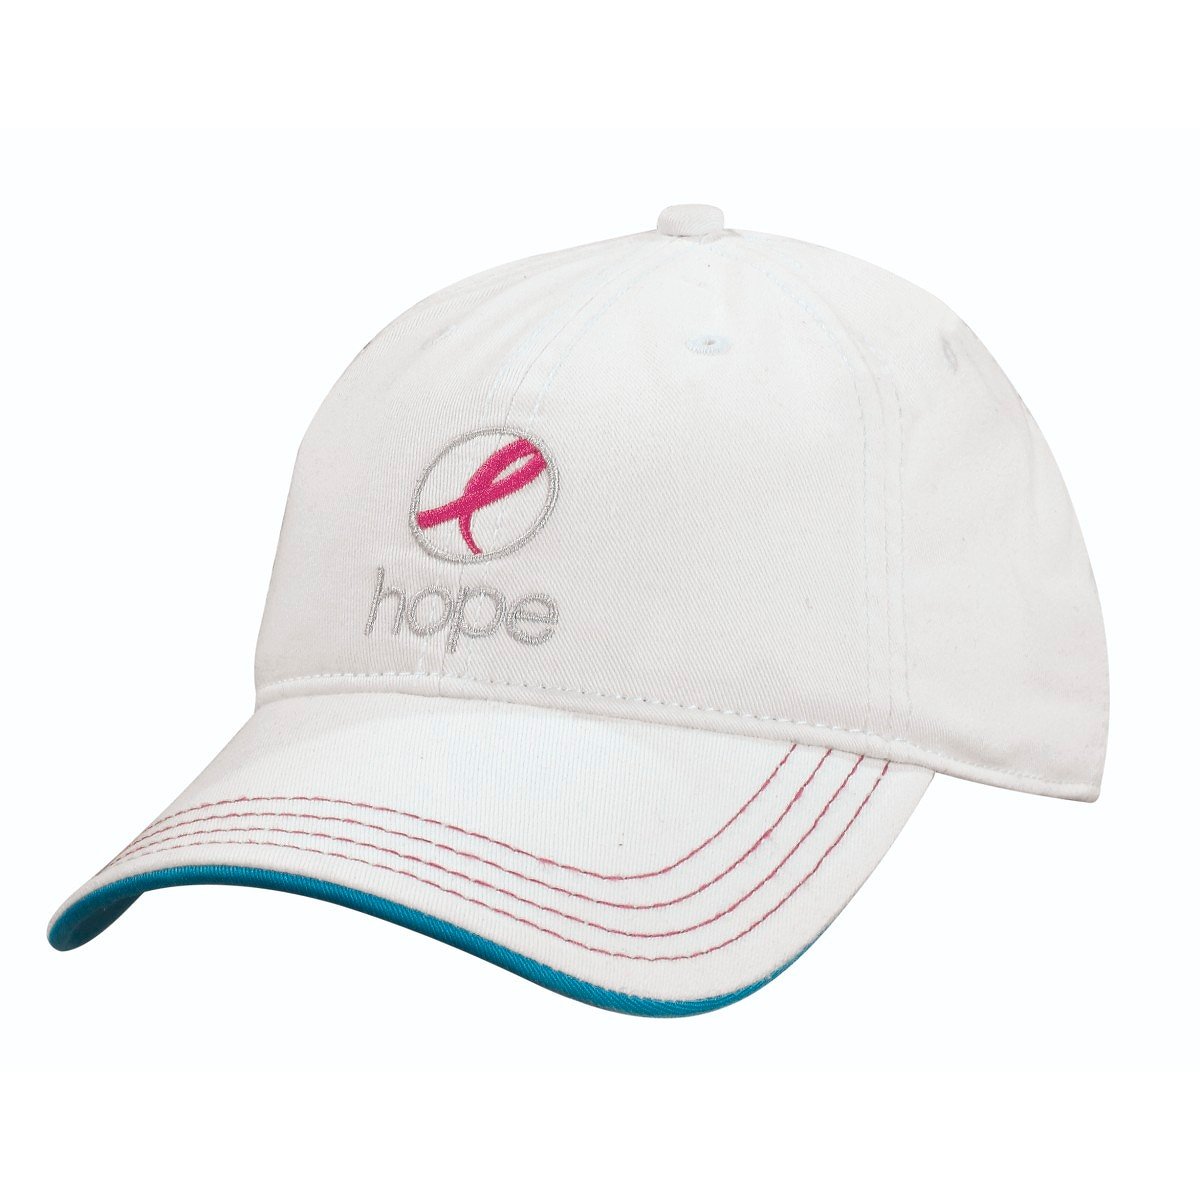 Wilson Women's Hope Relaxed Cap: Shop Quality Wilson Golf Headwear 